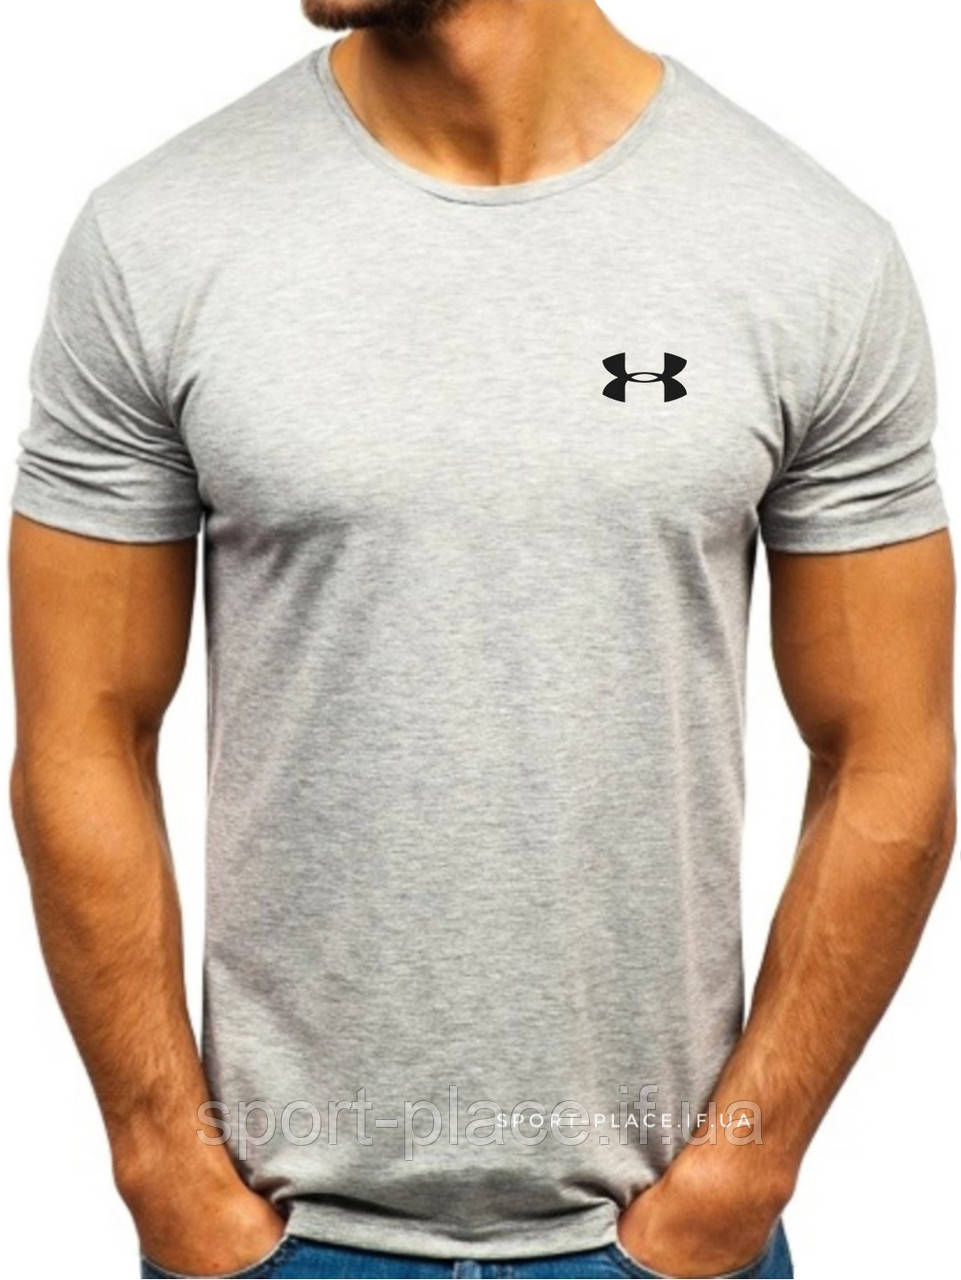 Чоловіча футболка Under Armour (Андер Армор) сіра (маленька емблема) бавовна